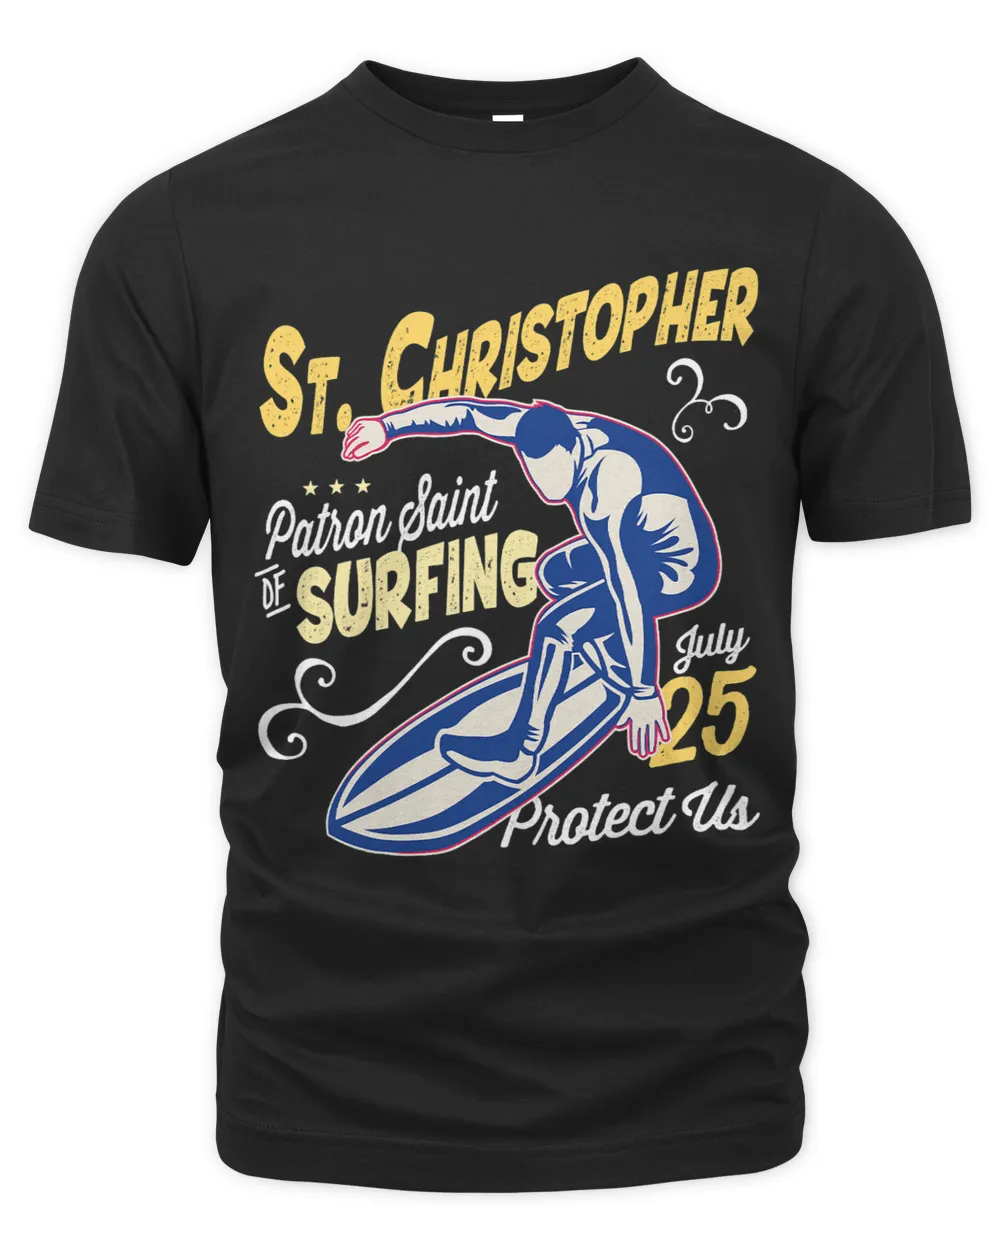 Saint Christopher Surf Patron Saint of Surfing Catholic Men